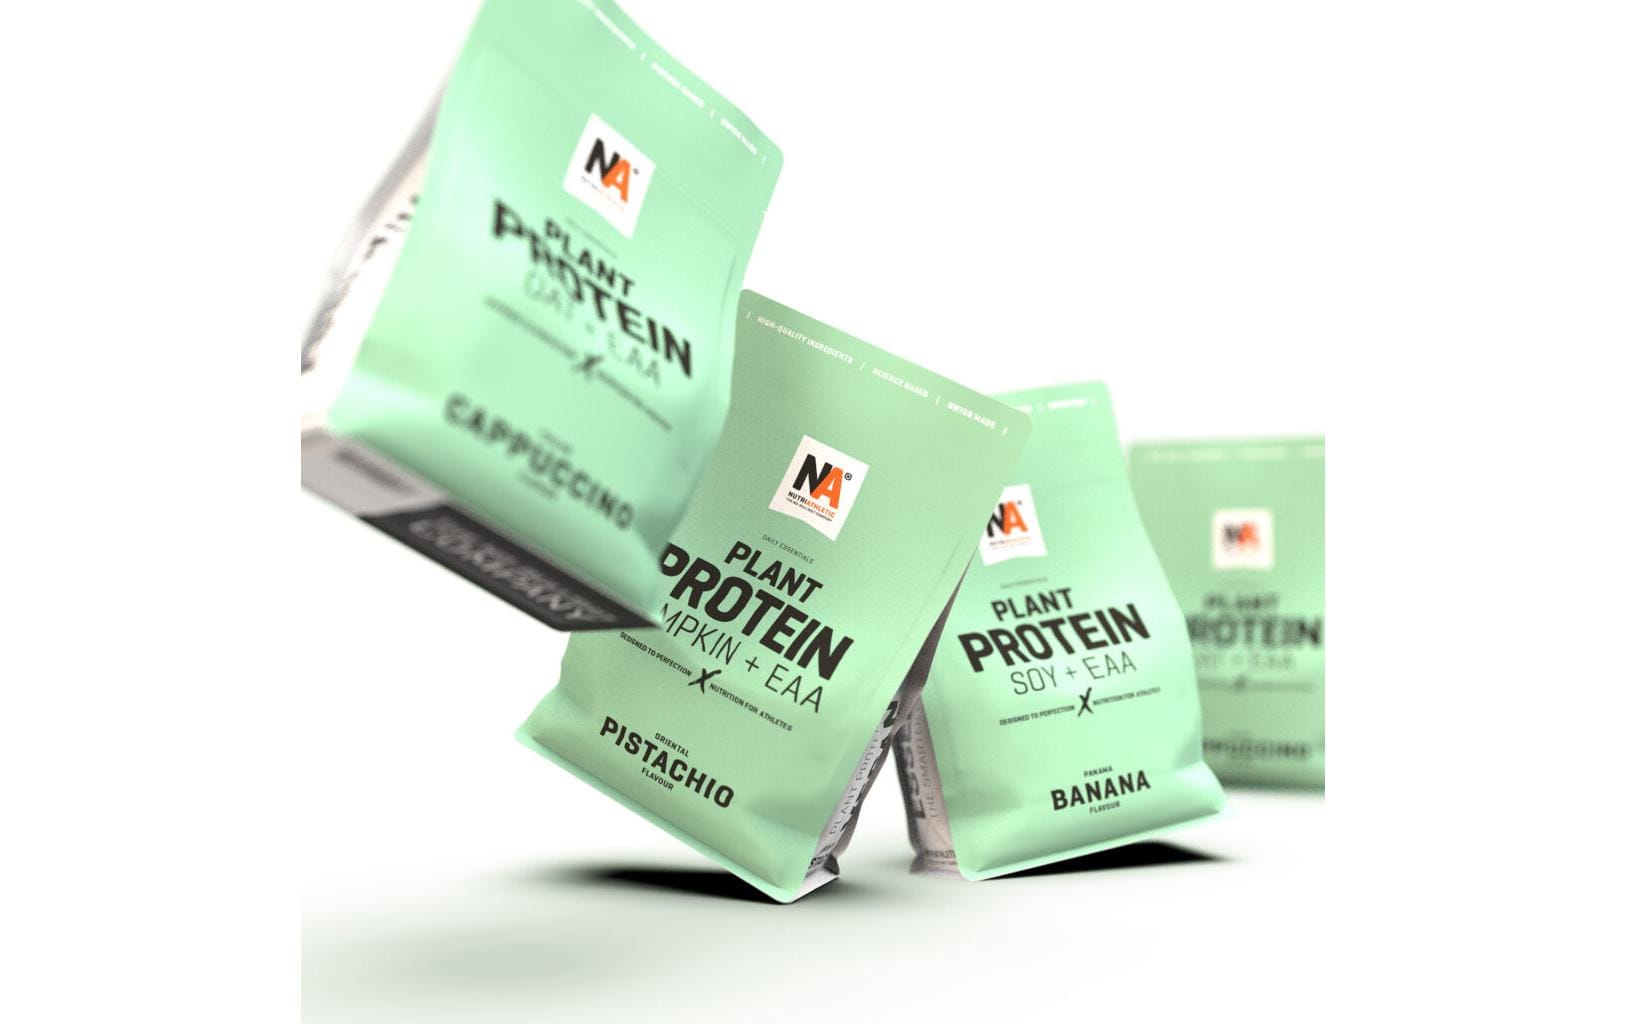 NUTRIATHLETIC Nahrungsergänzung Vegan Protein + EAA Kürbiskernprotein